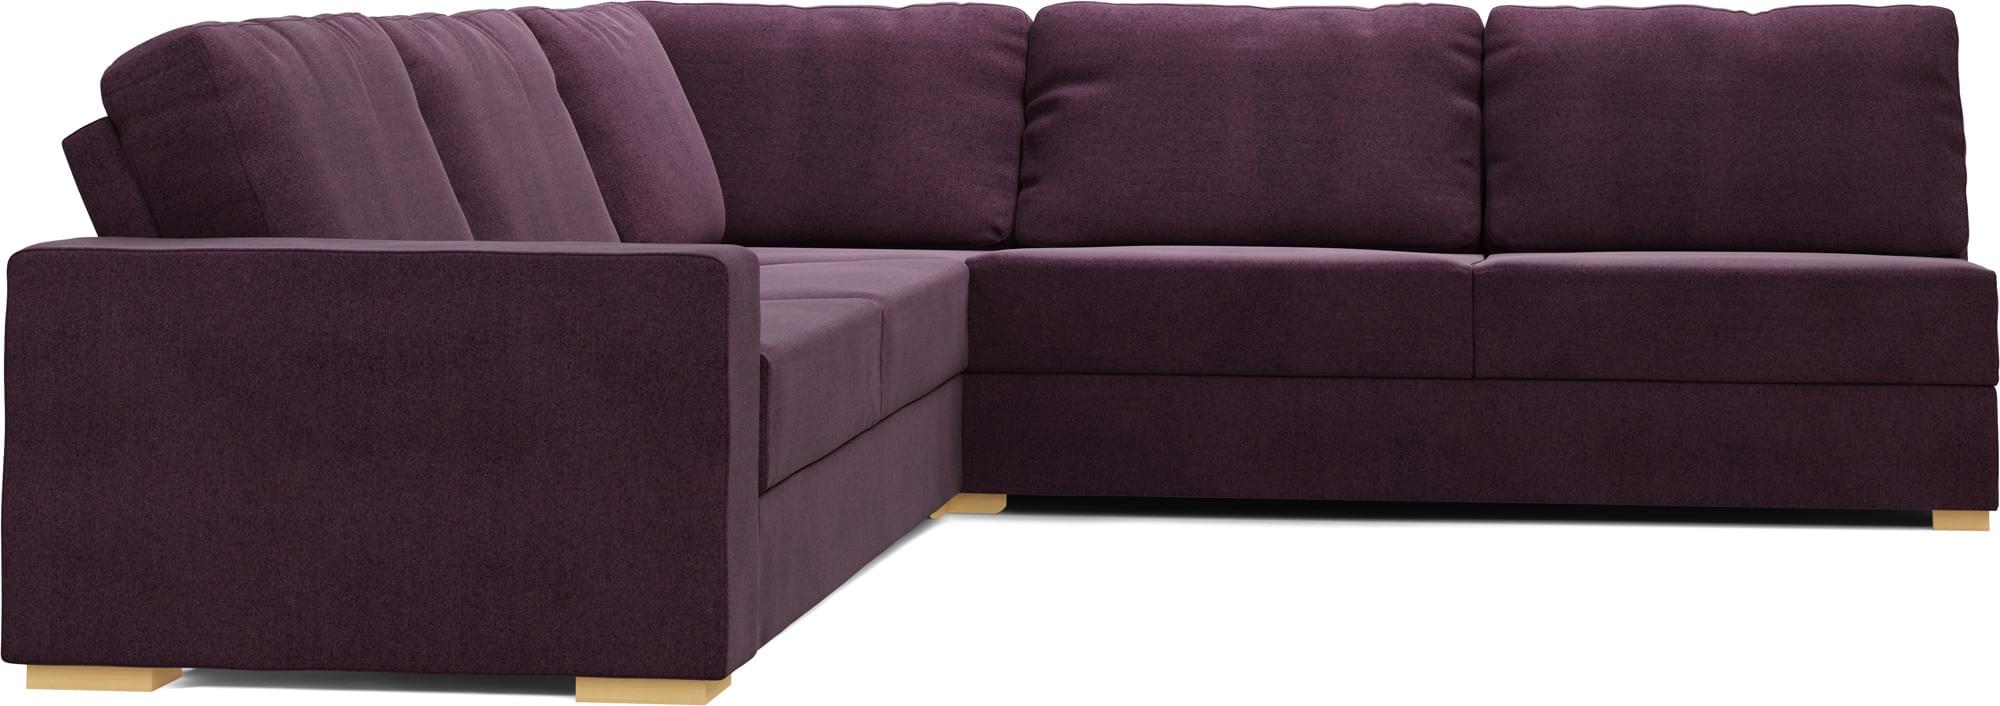 Ula Armless 3X3 Double Sofa Bed